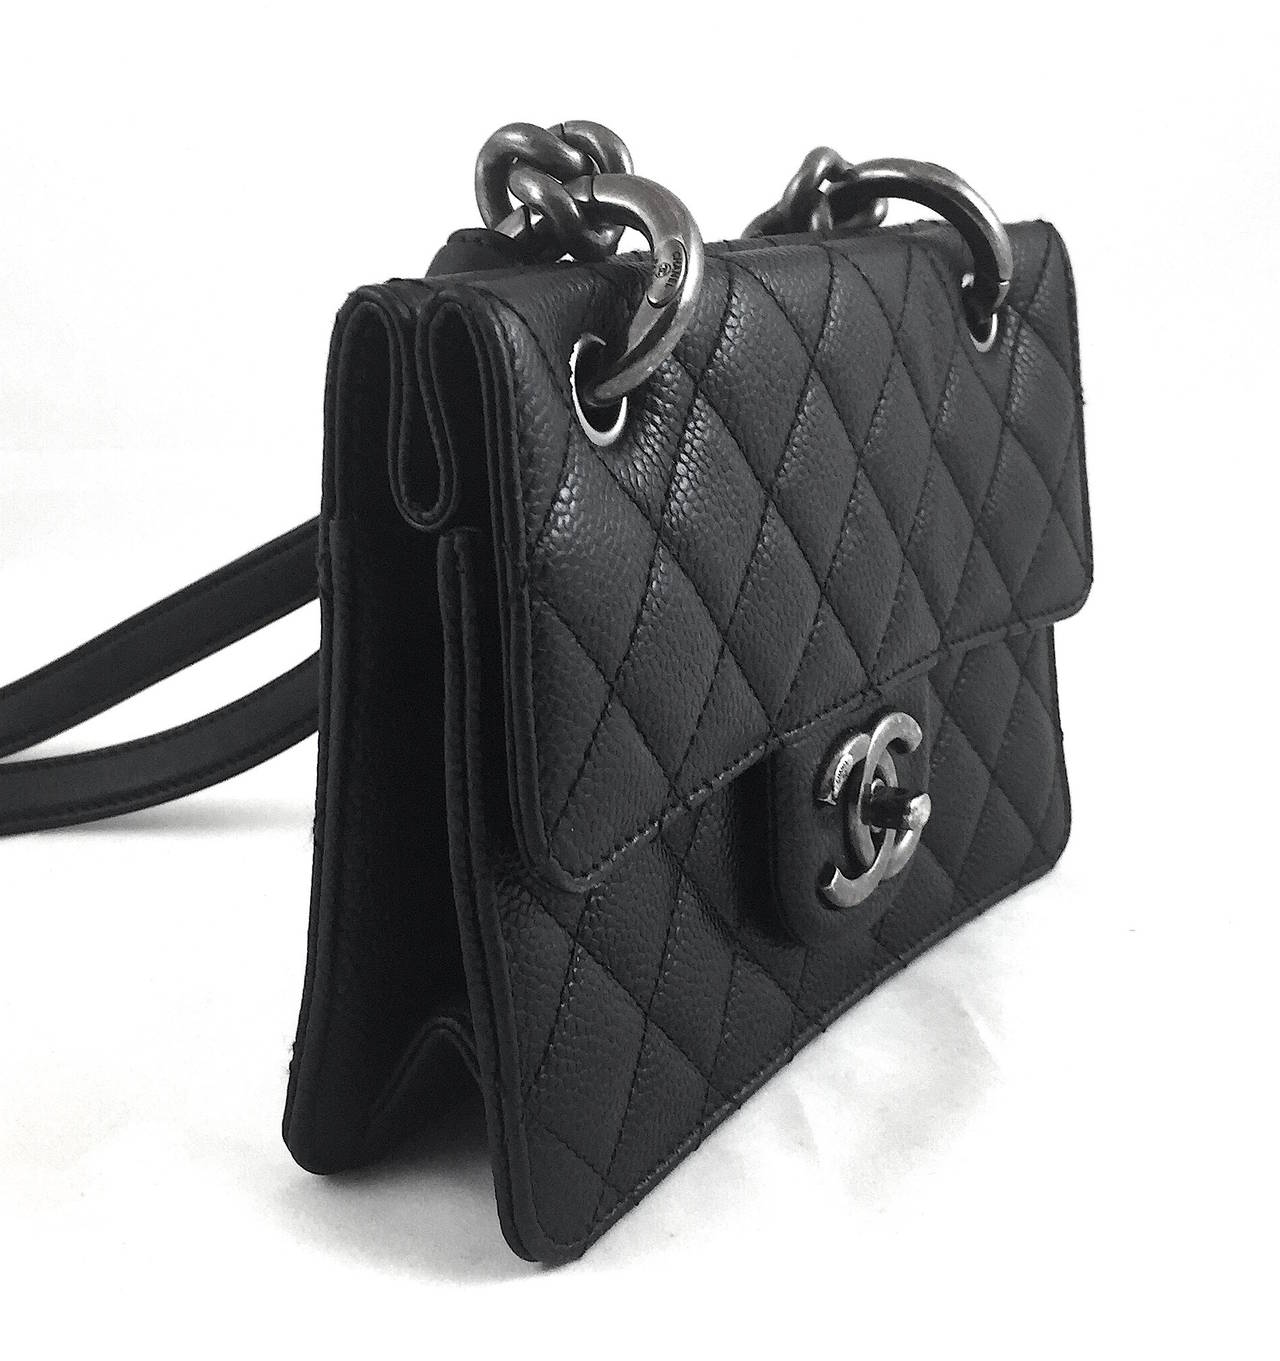 Women's Chanel Black Caviar Retro Flap Shoulder Bag, 2014/15 Fall Winter Collection